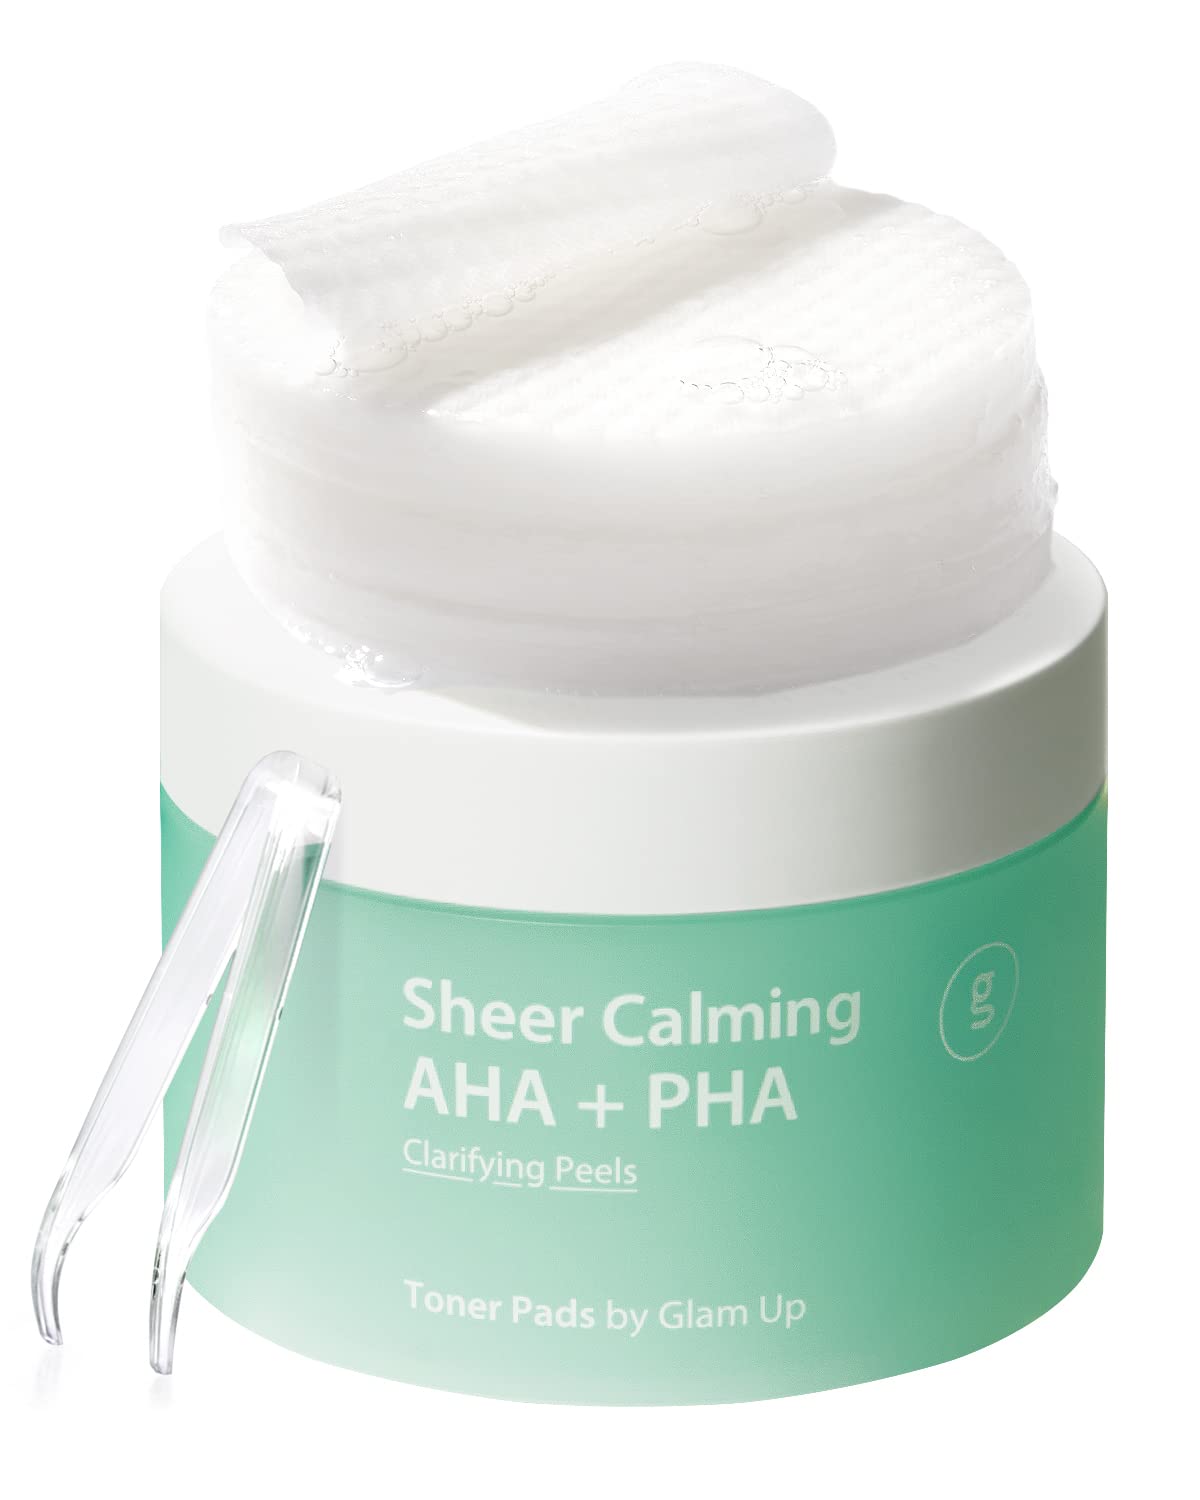 GLAM UP Spot Peeling & Exfoliating AHA PHA Toner Pads | Calming, Exfoliating, Pore Cleansing Korean Skincare Toner Pads for Sensitive Skin | Vegan Bamboo Cotton Face Gauze (65 Pads)